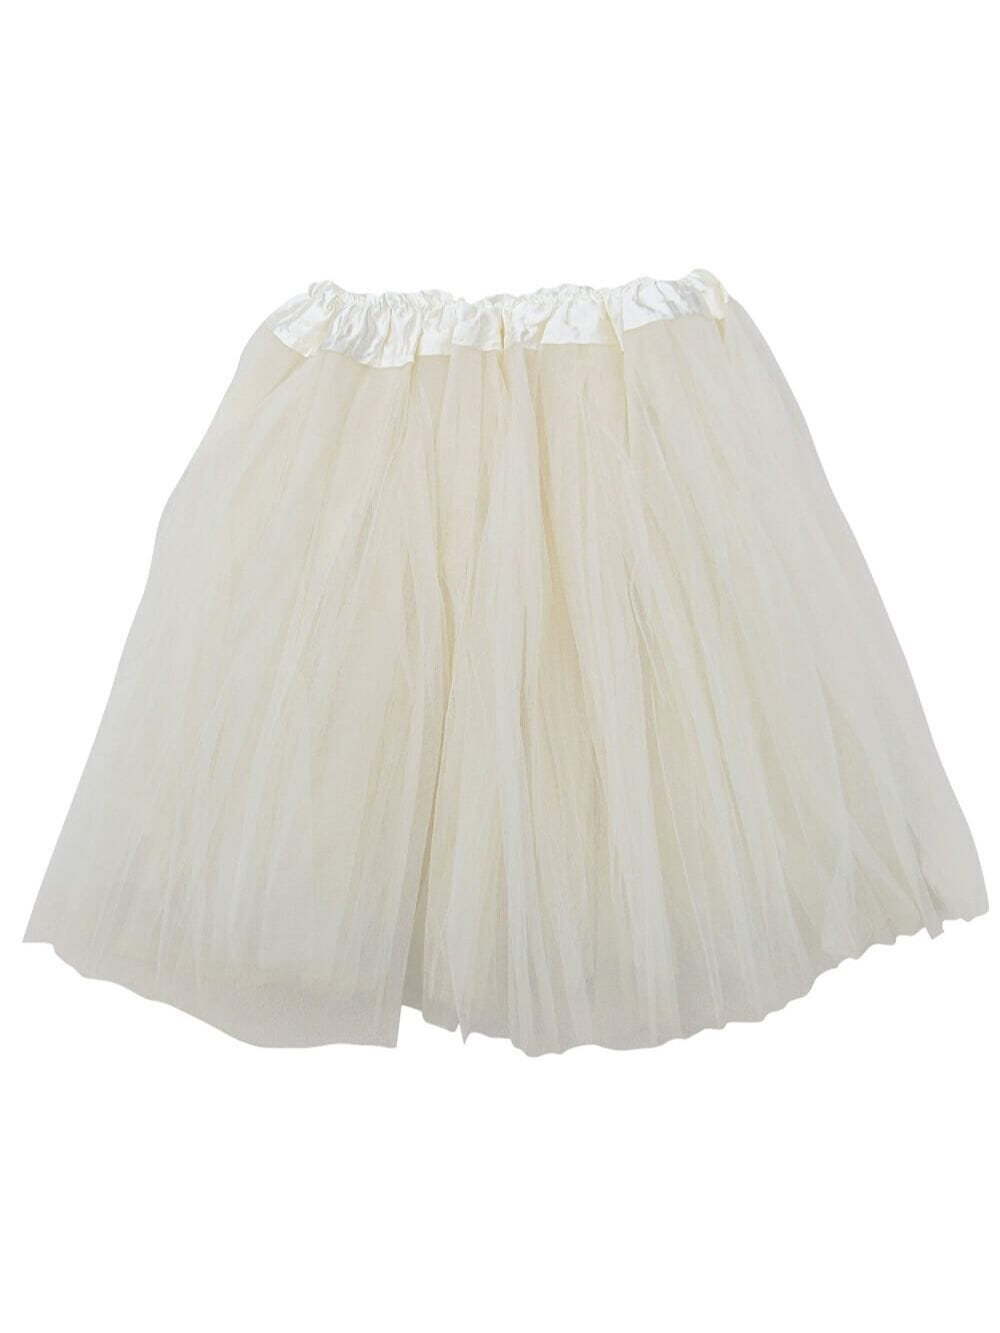 Ivory Adult Tutu Skirt - Women's Size 3-Layer Basic Ballet Costume Dance Tutus - Sydney So Sweet